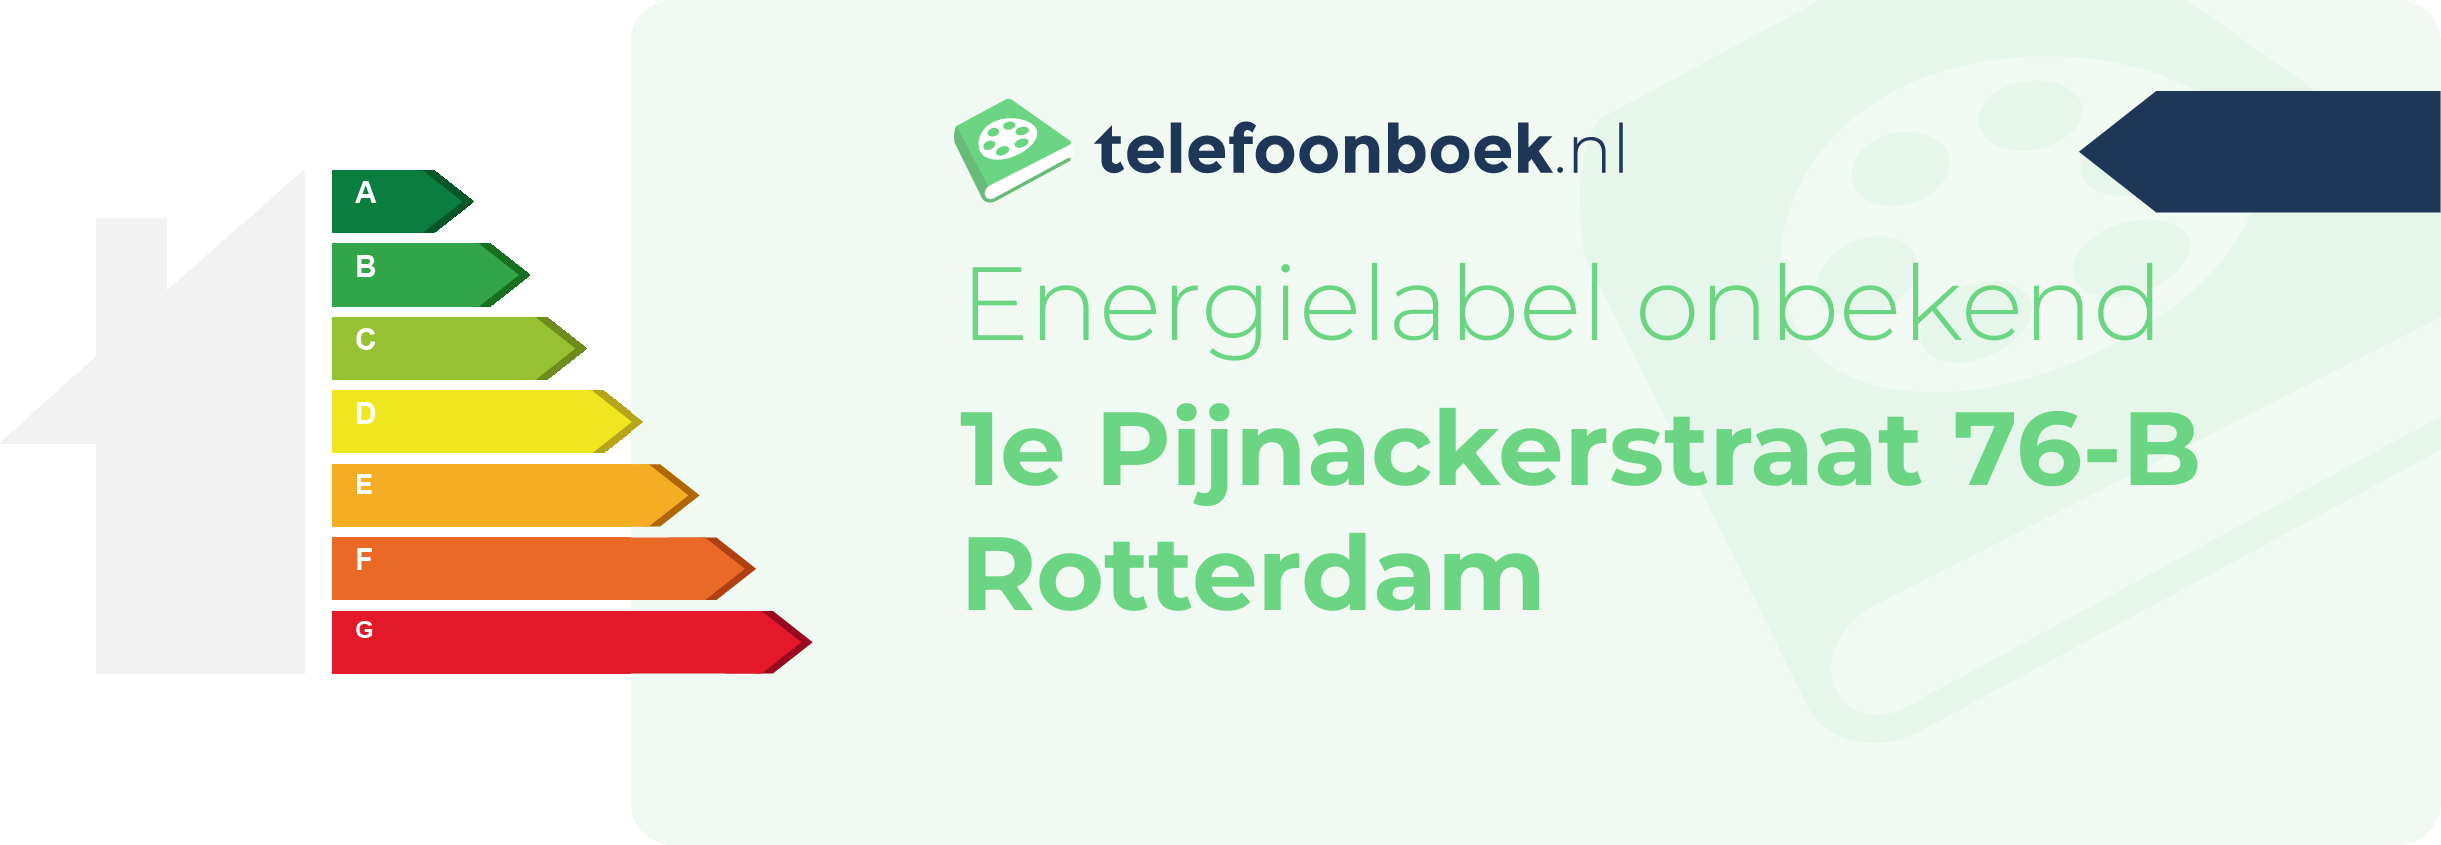 Energielabel 1e Pijnackerstraat 76-B Rotterdam